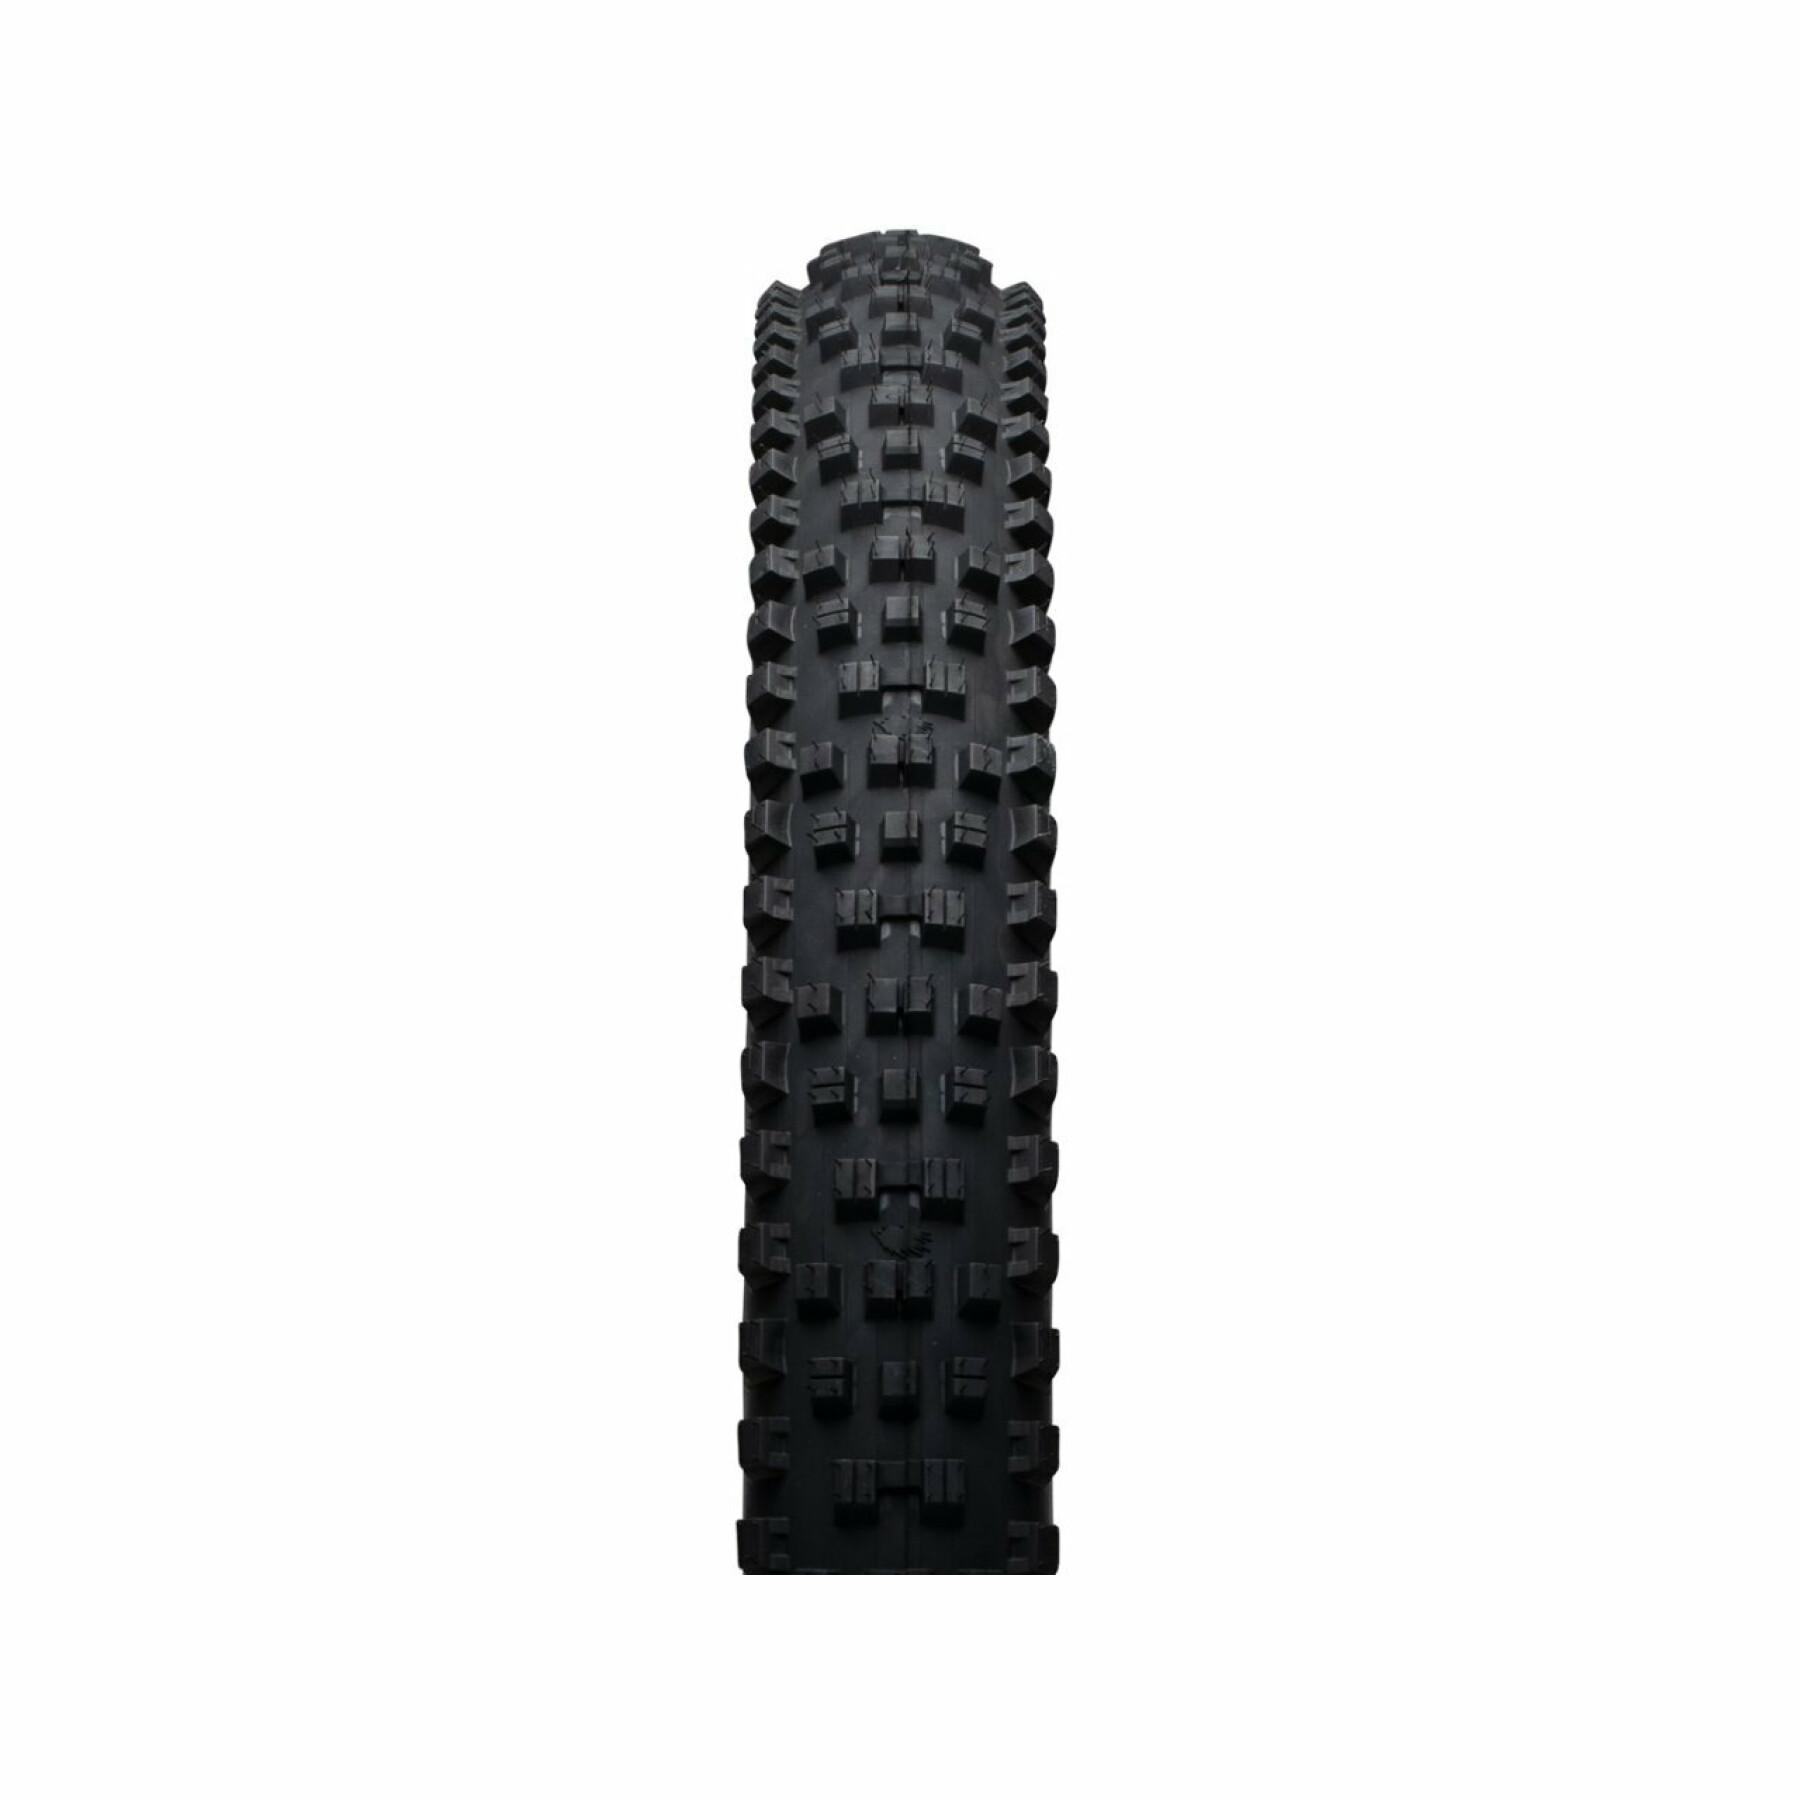 Neumáticos Onza Porcupine TRC 60 TPI gomme ,60a | 45a, 61-622, 810